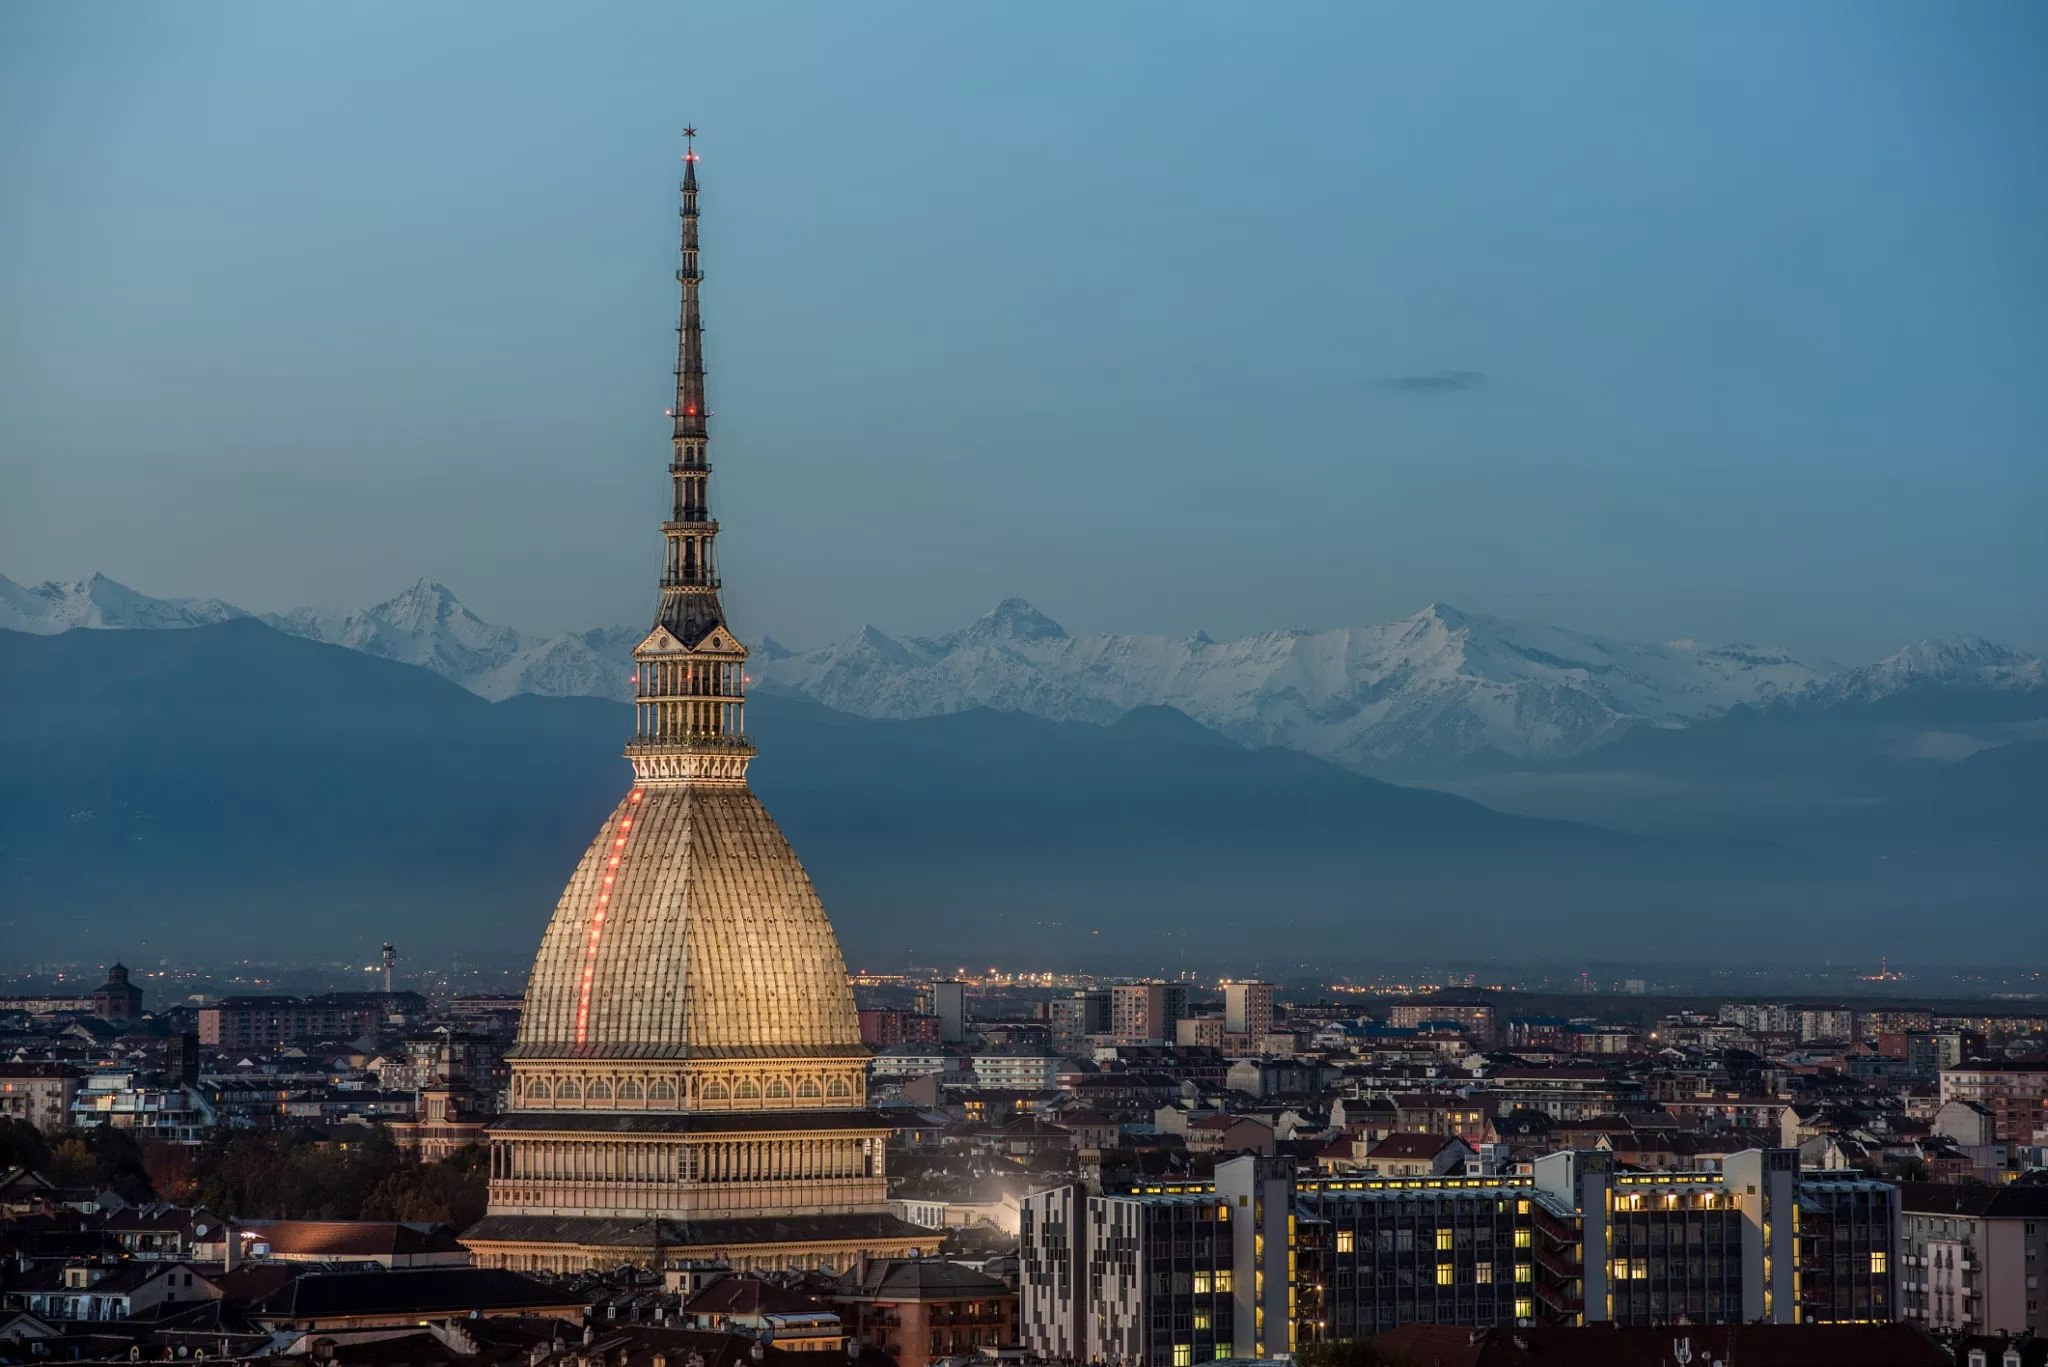 Mole Antonelliana in Italy, Europe | Architecture - Rated 4.3